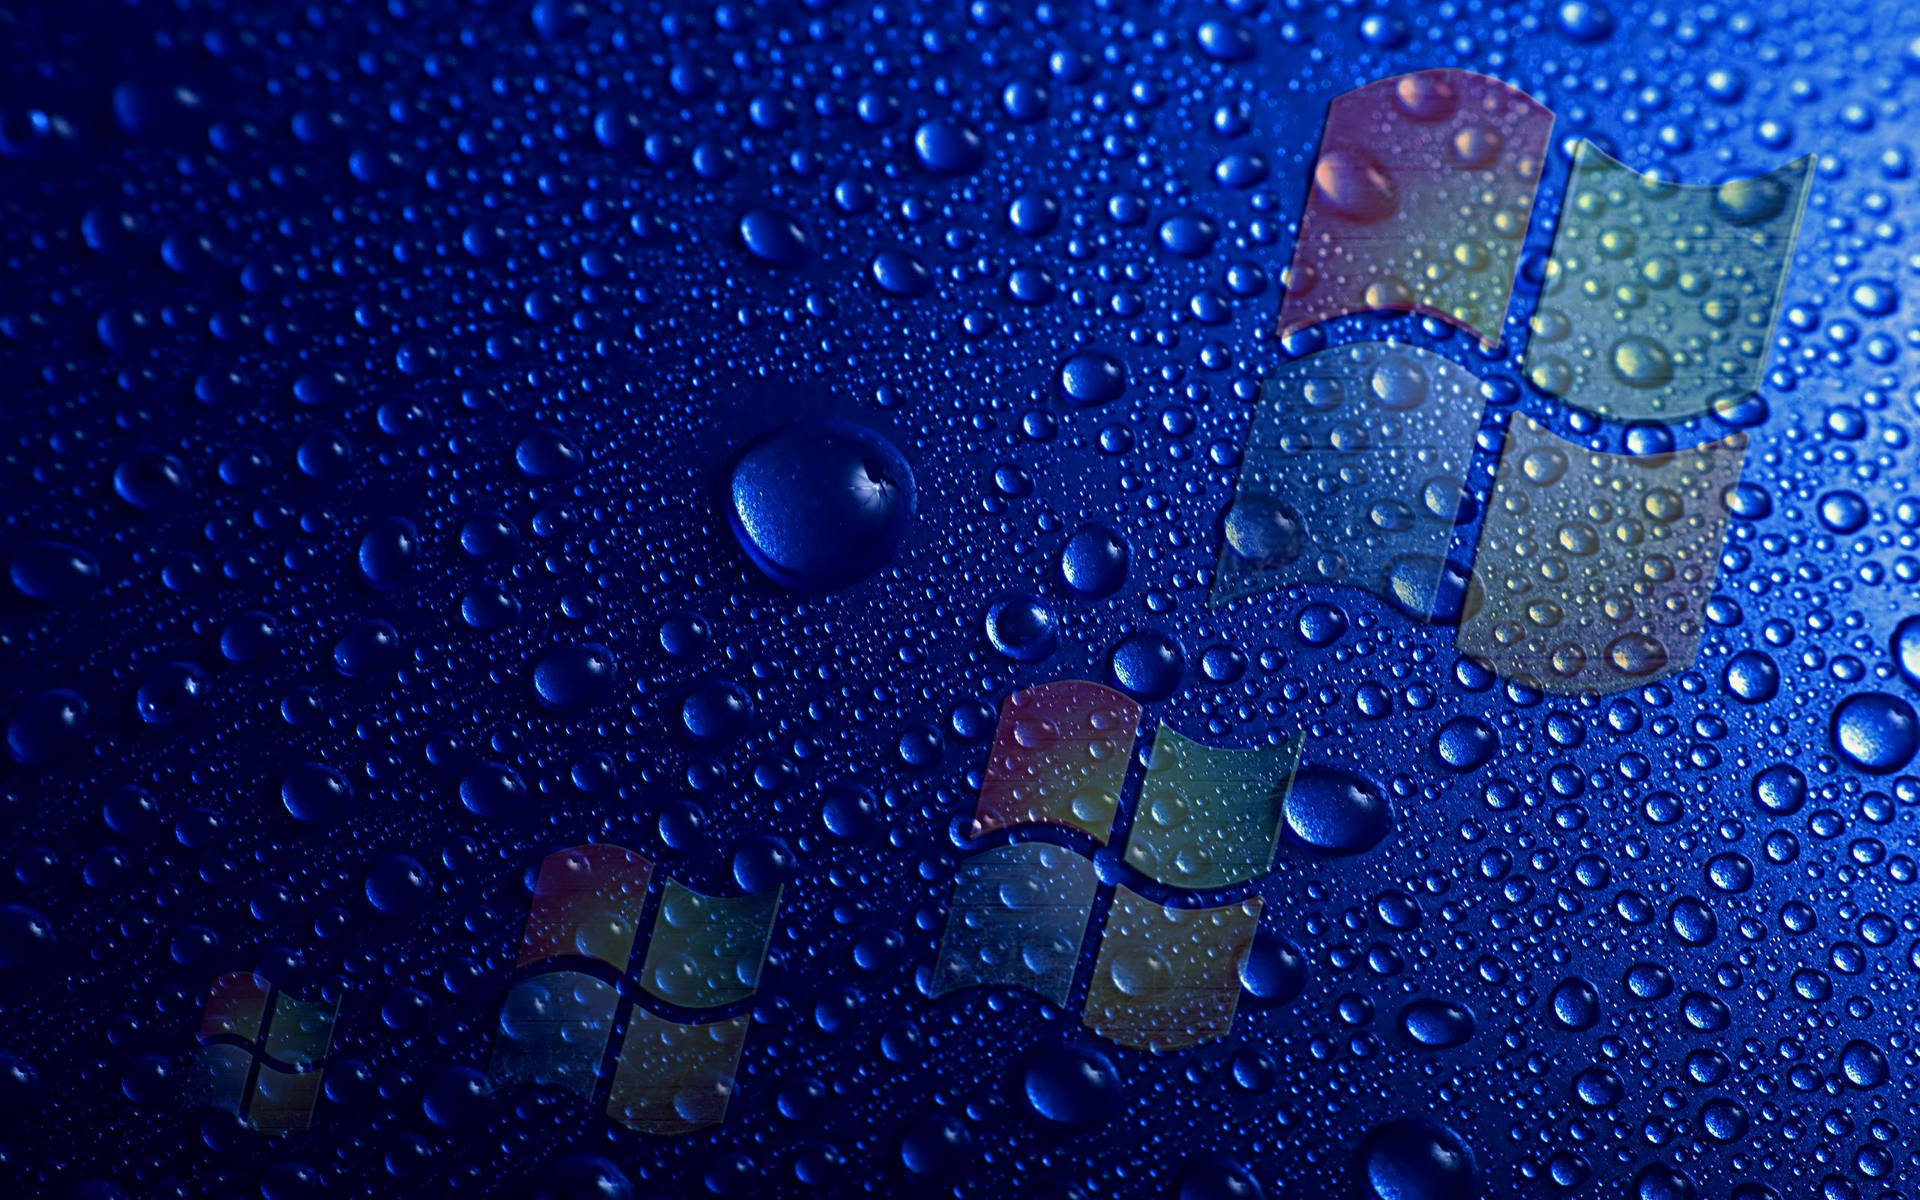 Windows 8 1080P, 2K, 4K, 5K HD wallpapers free download | Wallpaper Flare